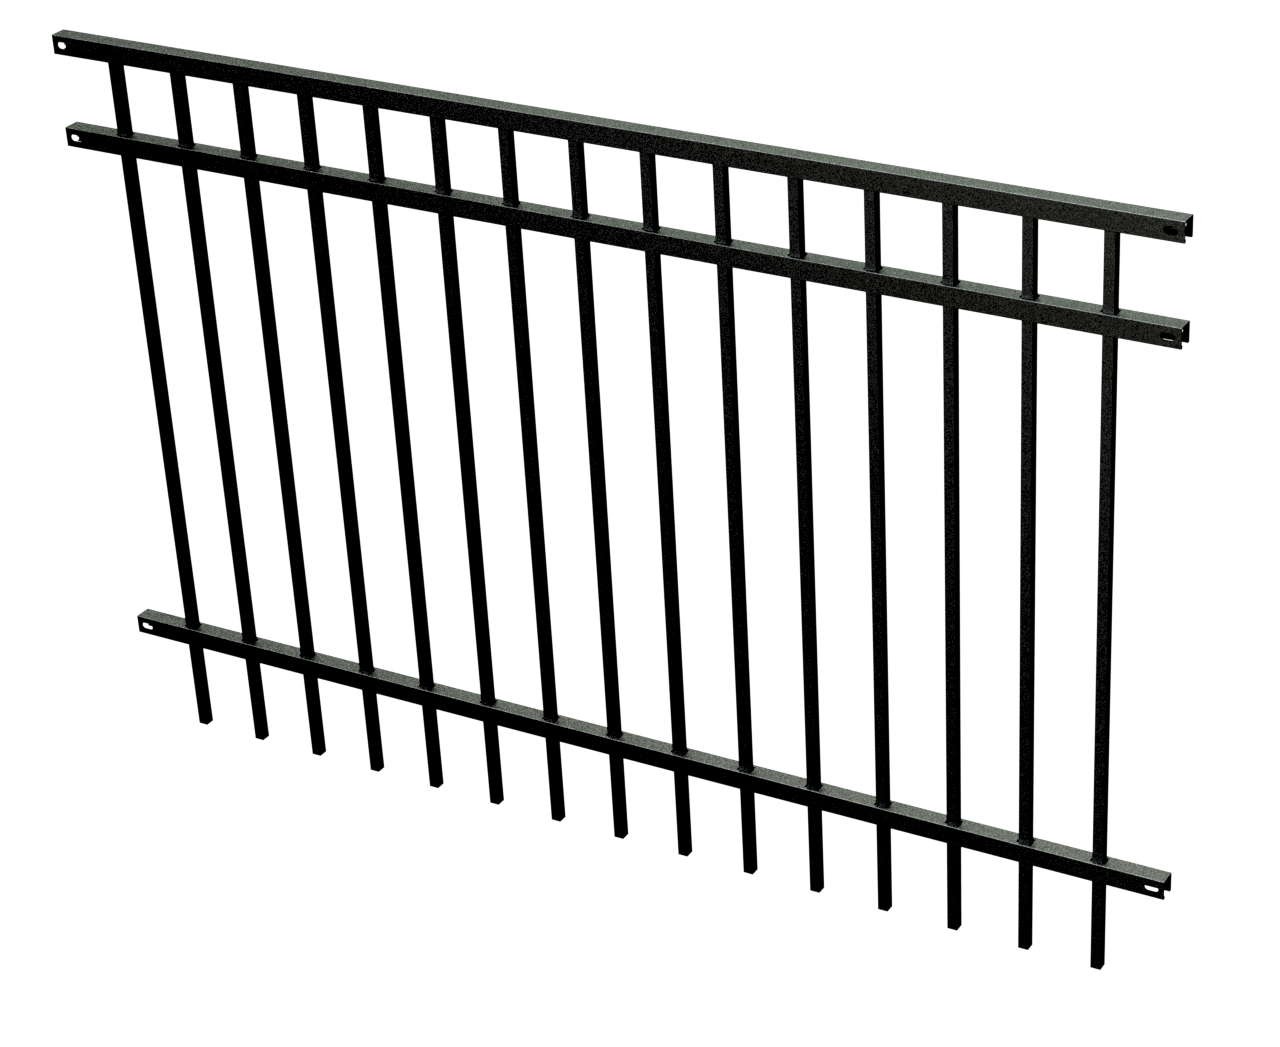 TruView-Alu - Ornamental Aluminum Fence Panels